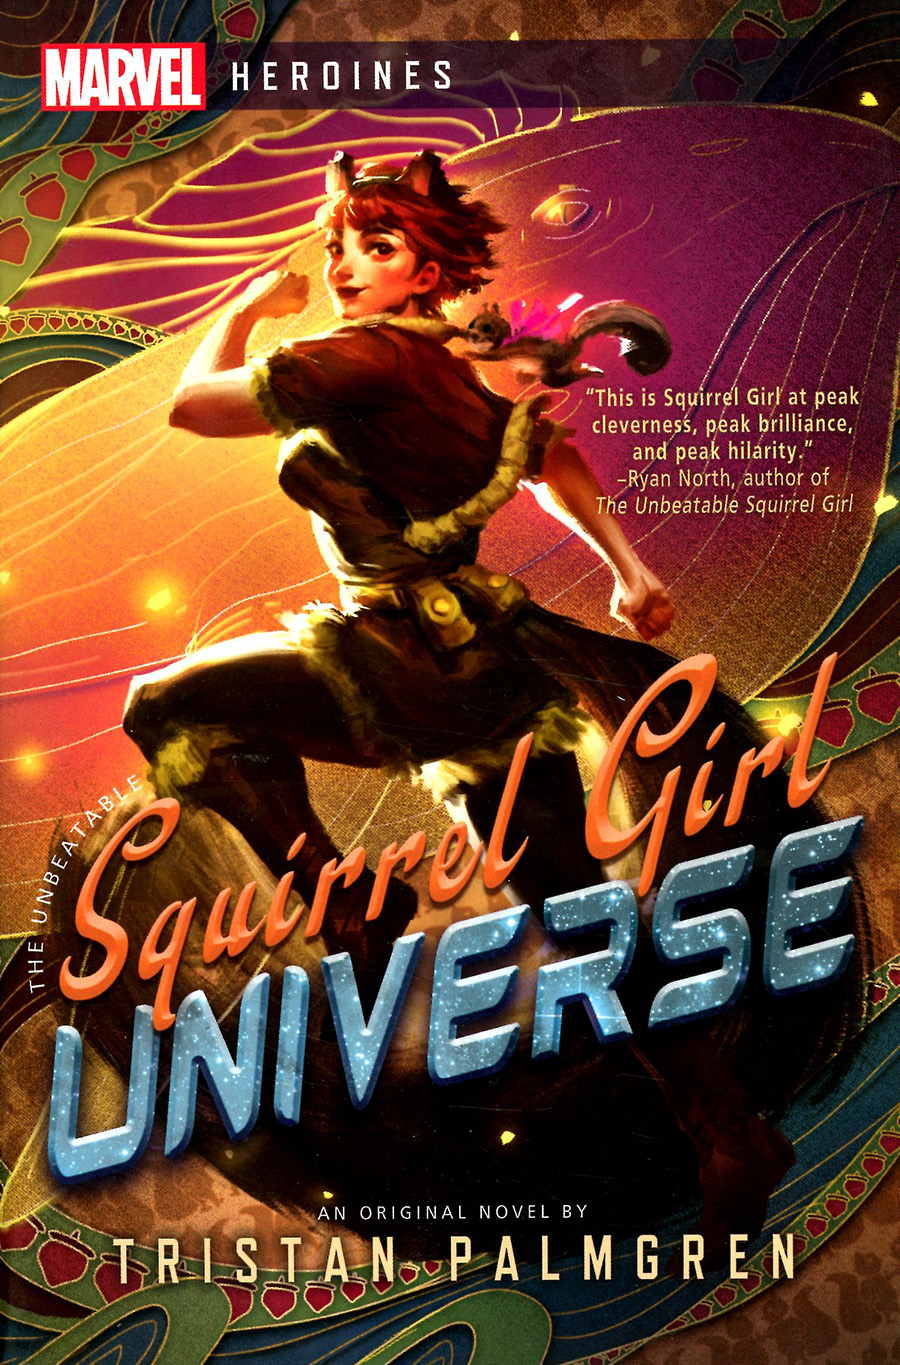 Marvel Heroines Novel Squirrel Girl Universe TP